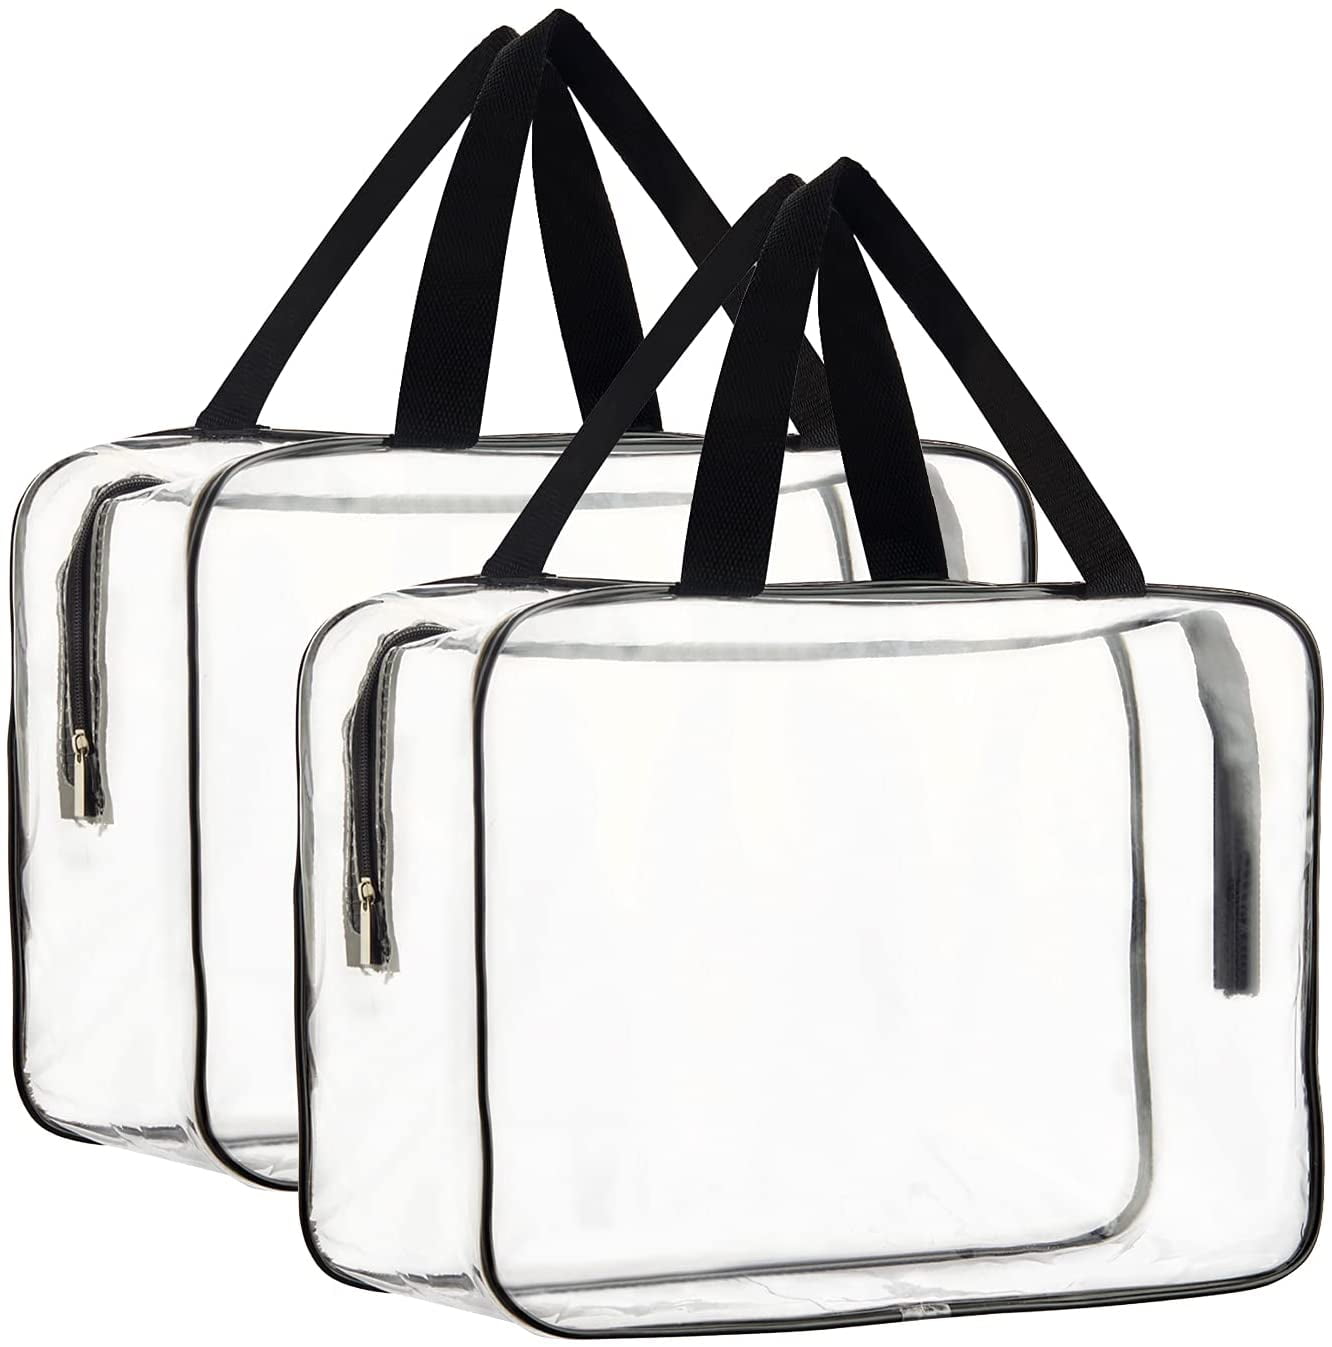  Wobe 2 Pack Portable Clear Makeup Bag Zipper